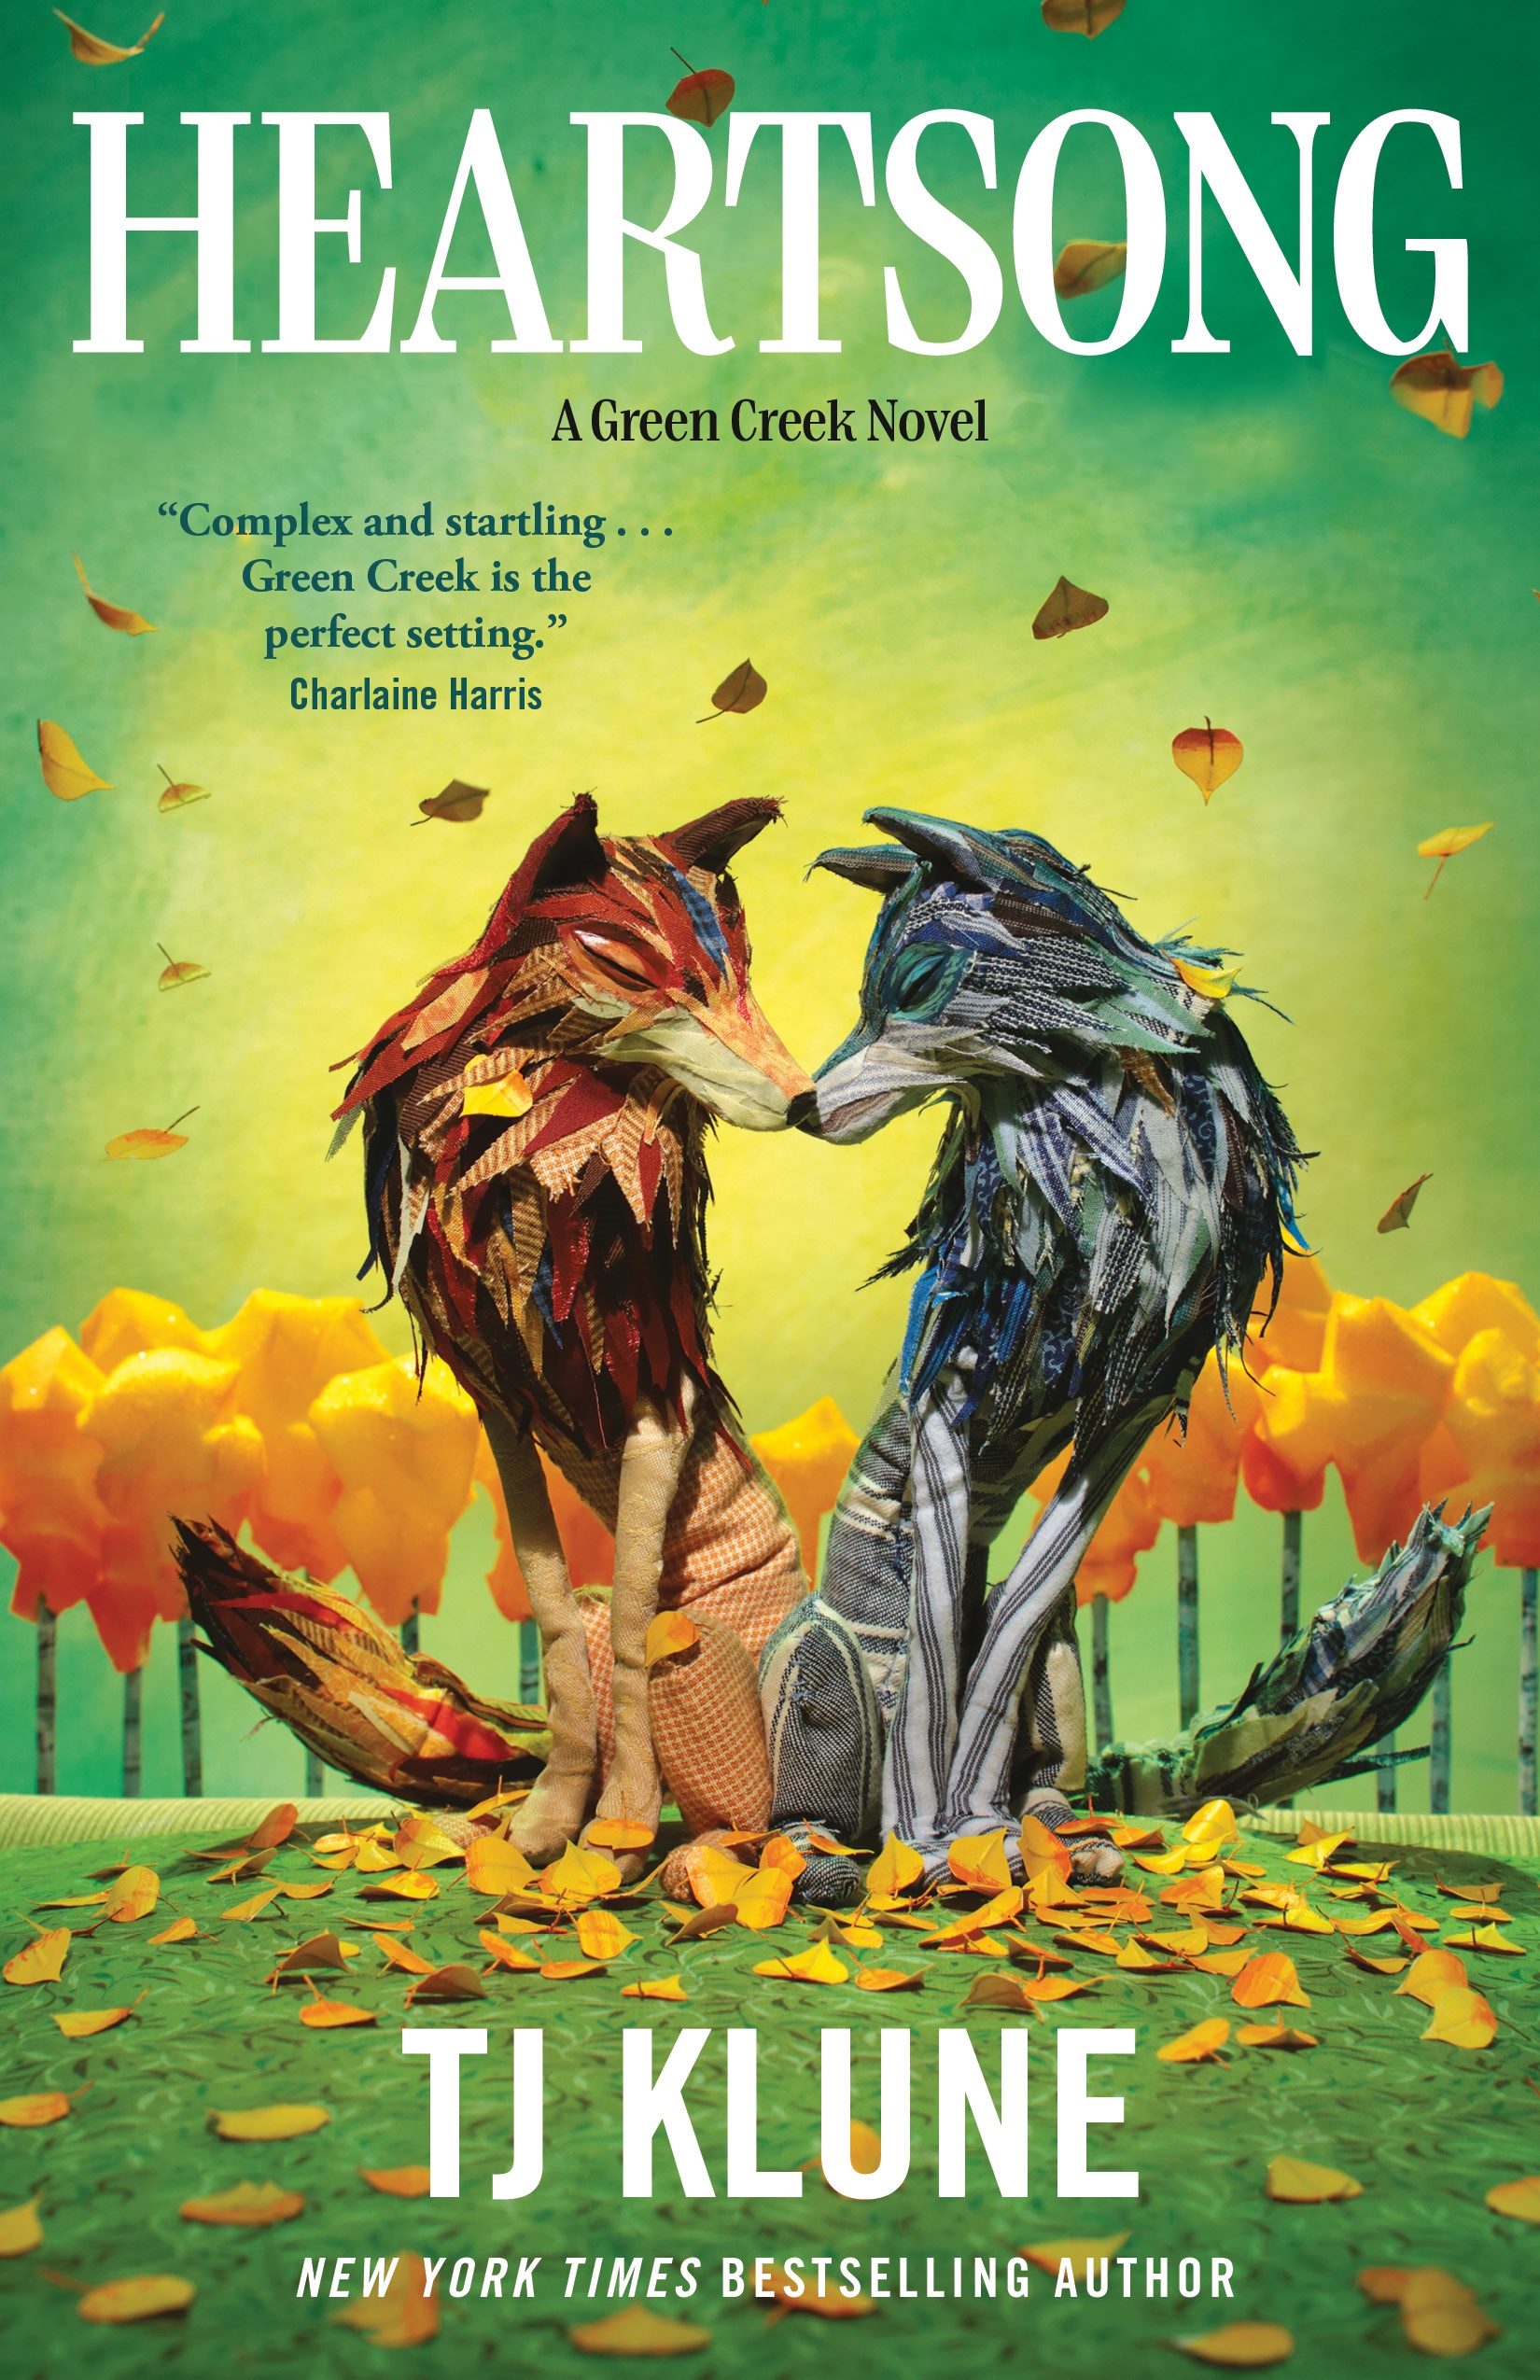 Heartsong : A Green Creek Novel by TJ Klune